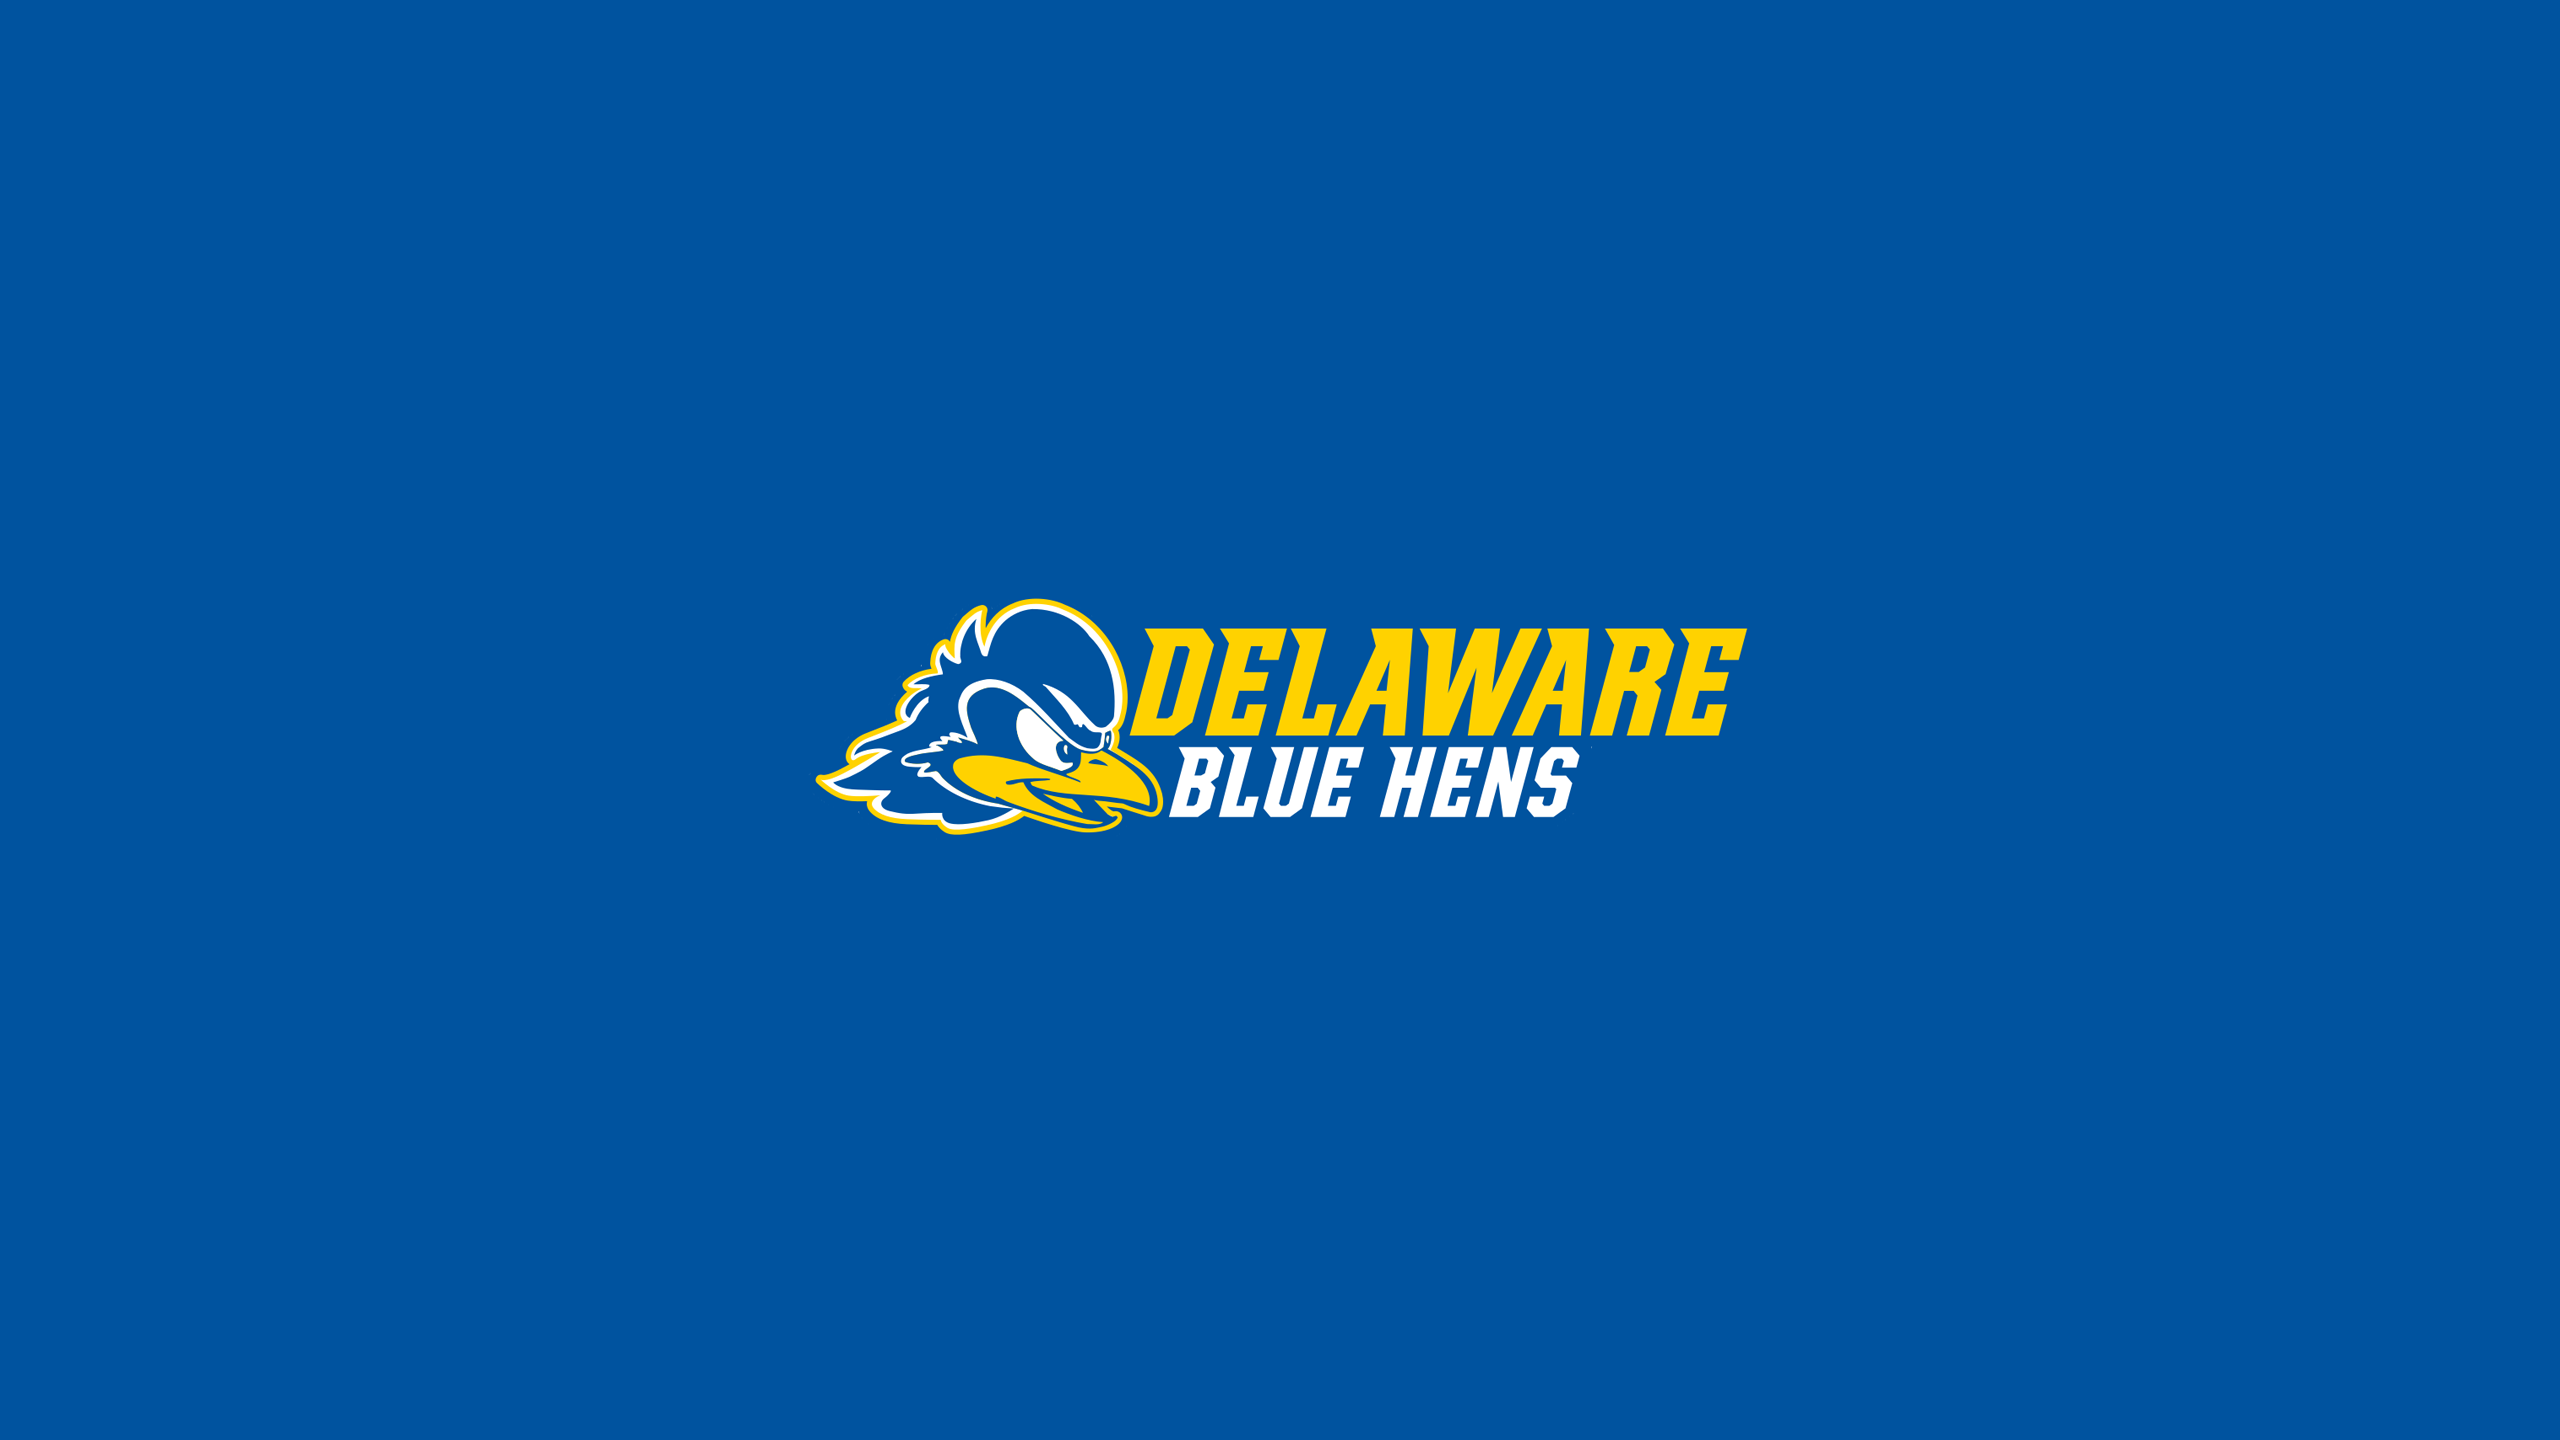 Delaware Fightin' Blue Hens Basketball - NCAAB - Square Bettor